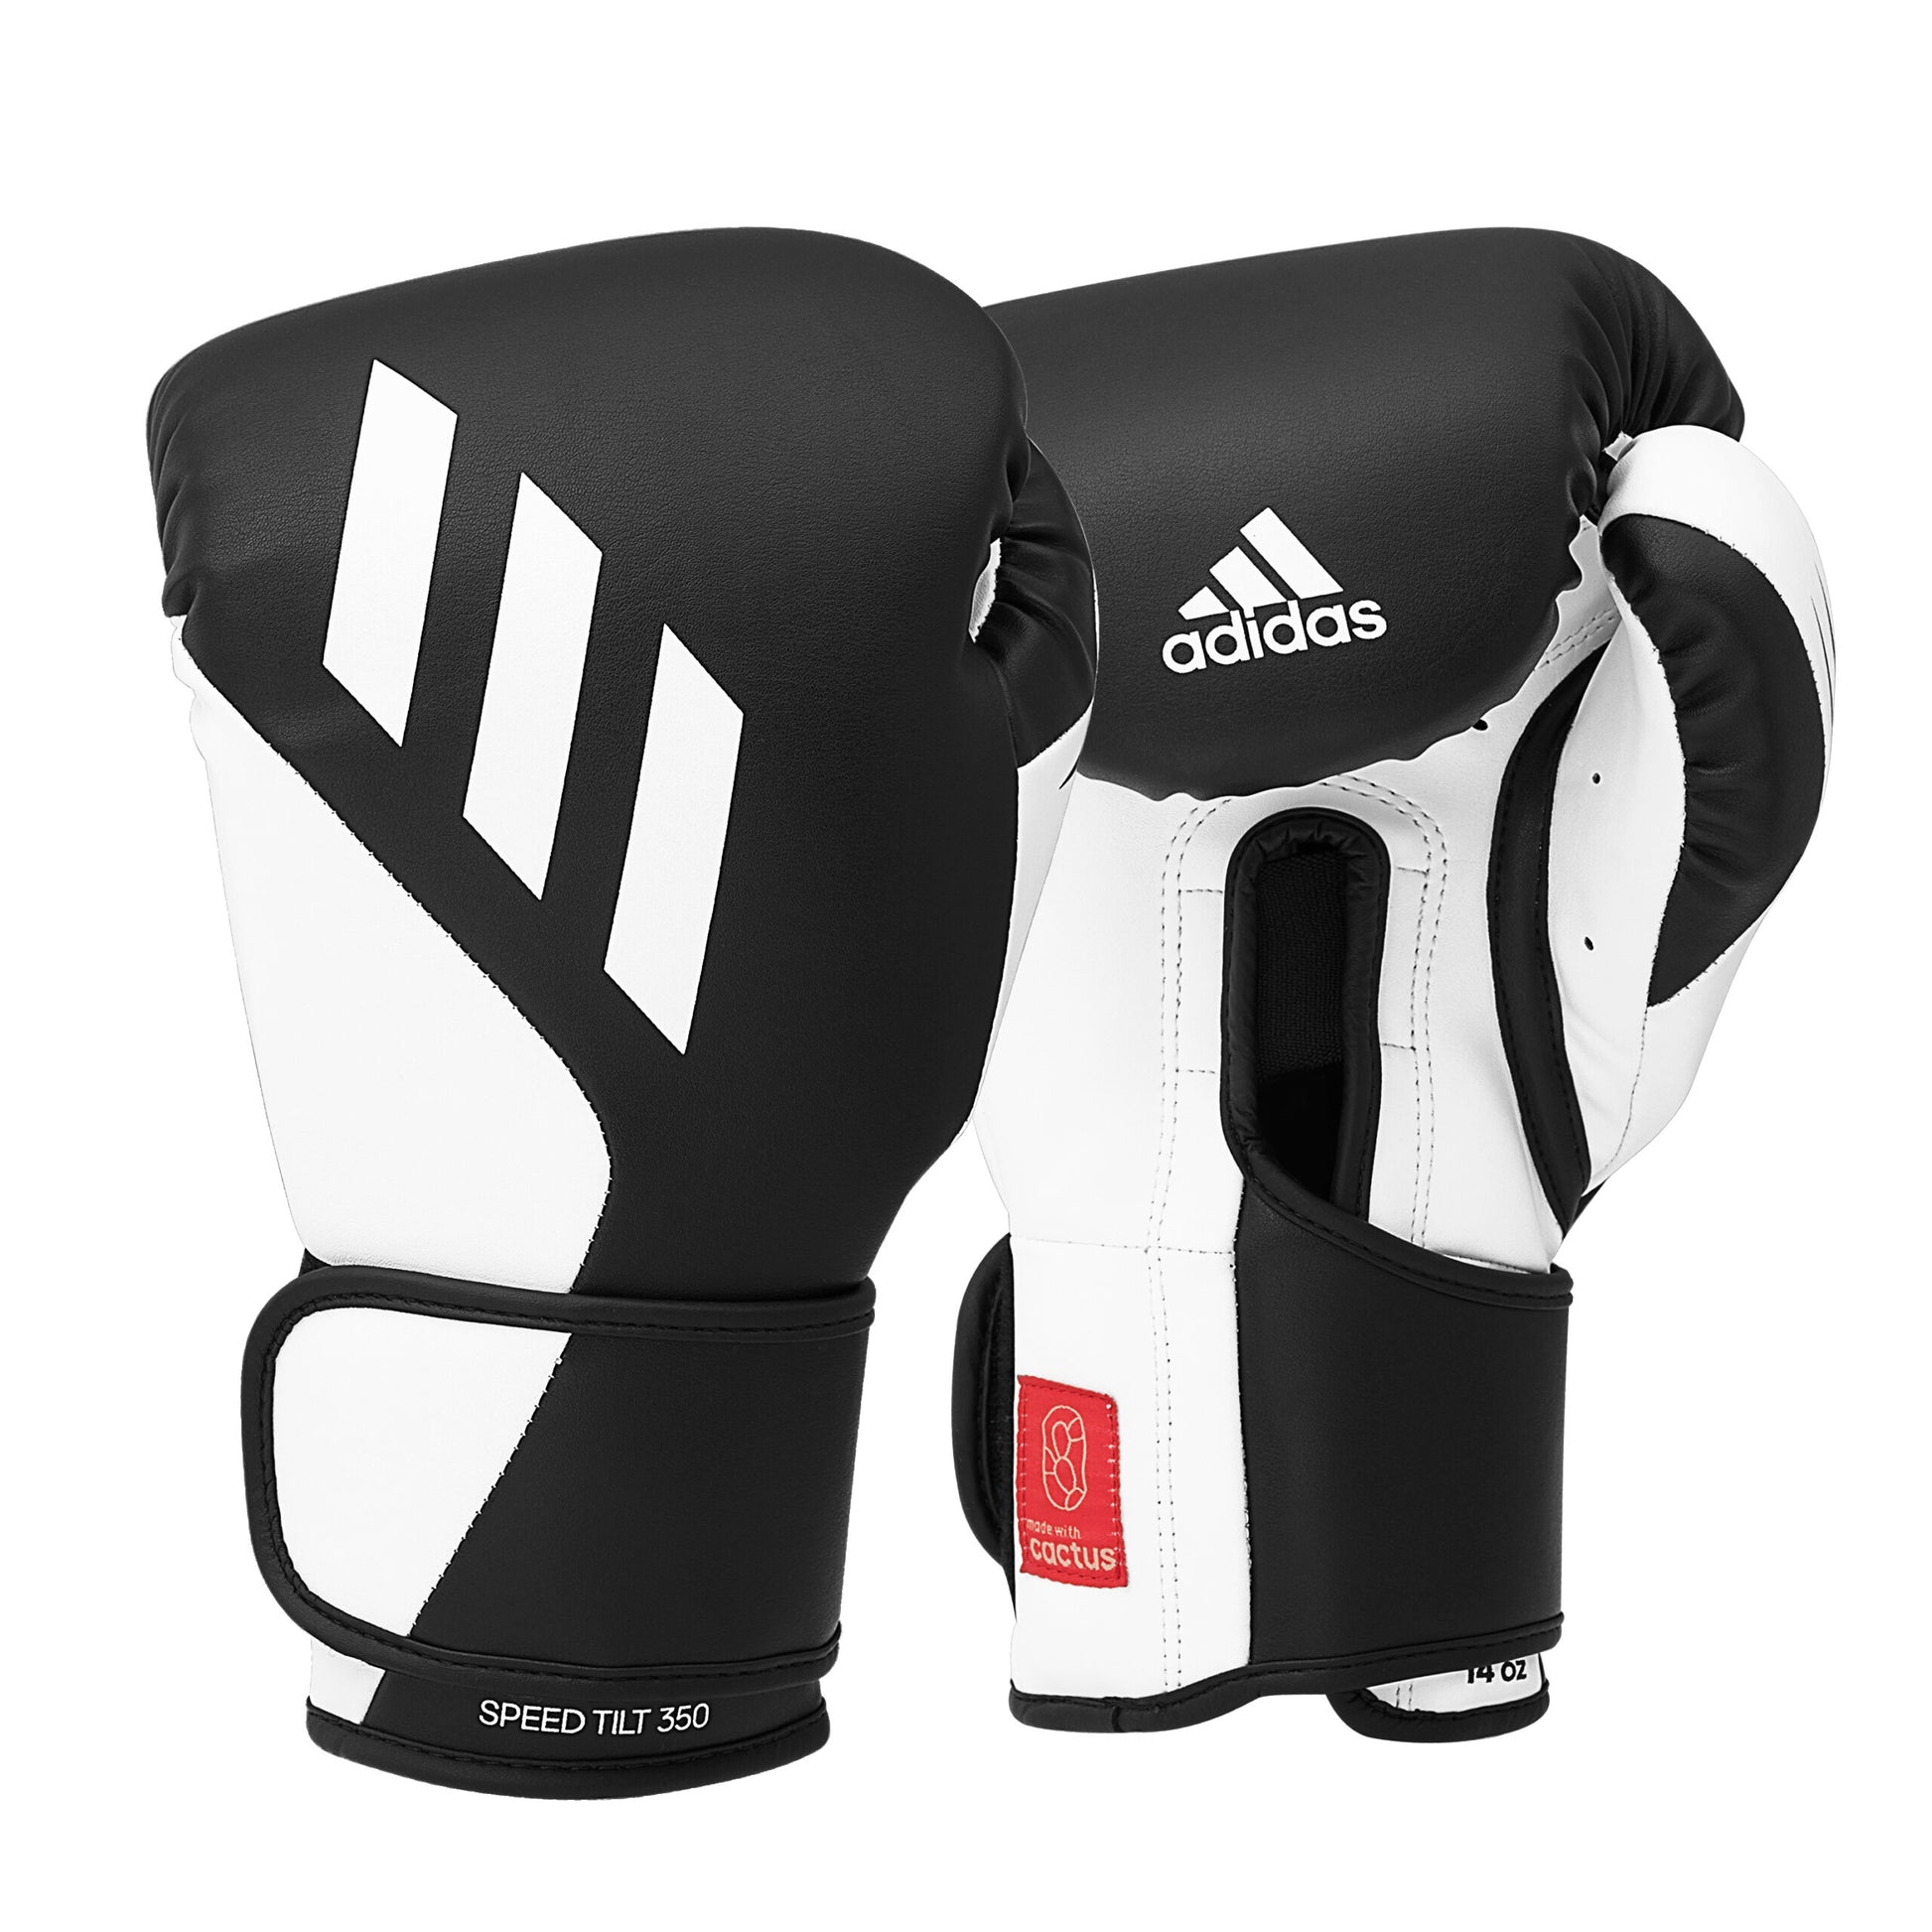 Adispd350tg Adidas Tilt 350 Pro Training Boxing Glove Strap Black White 01